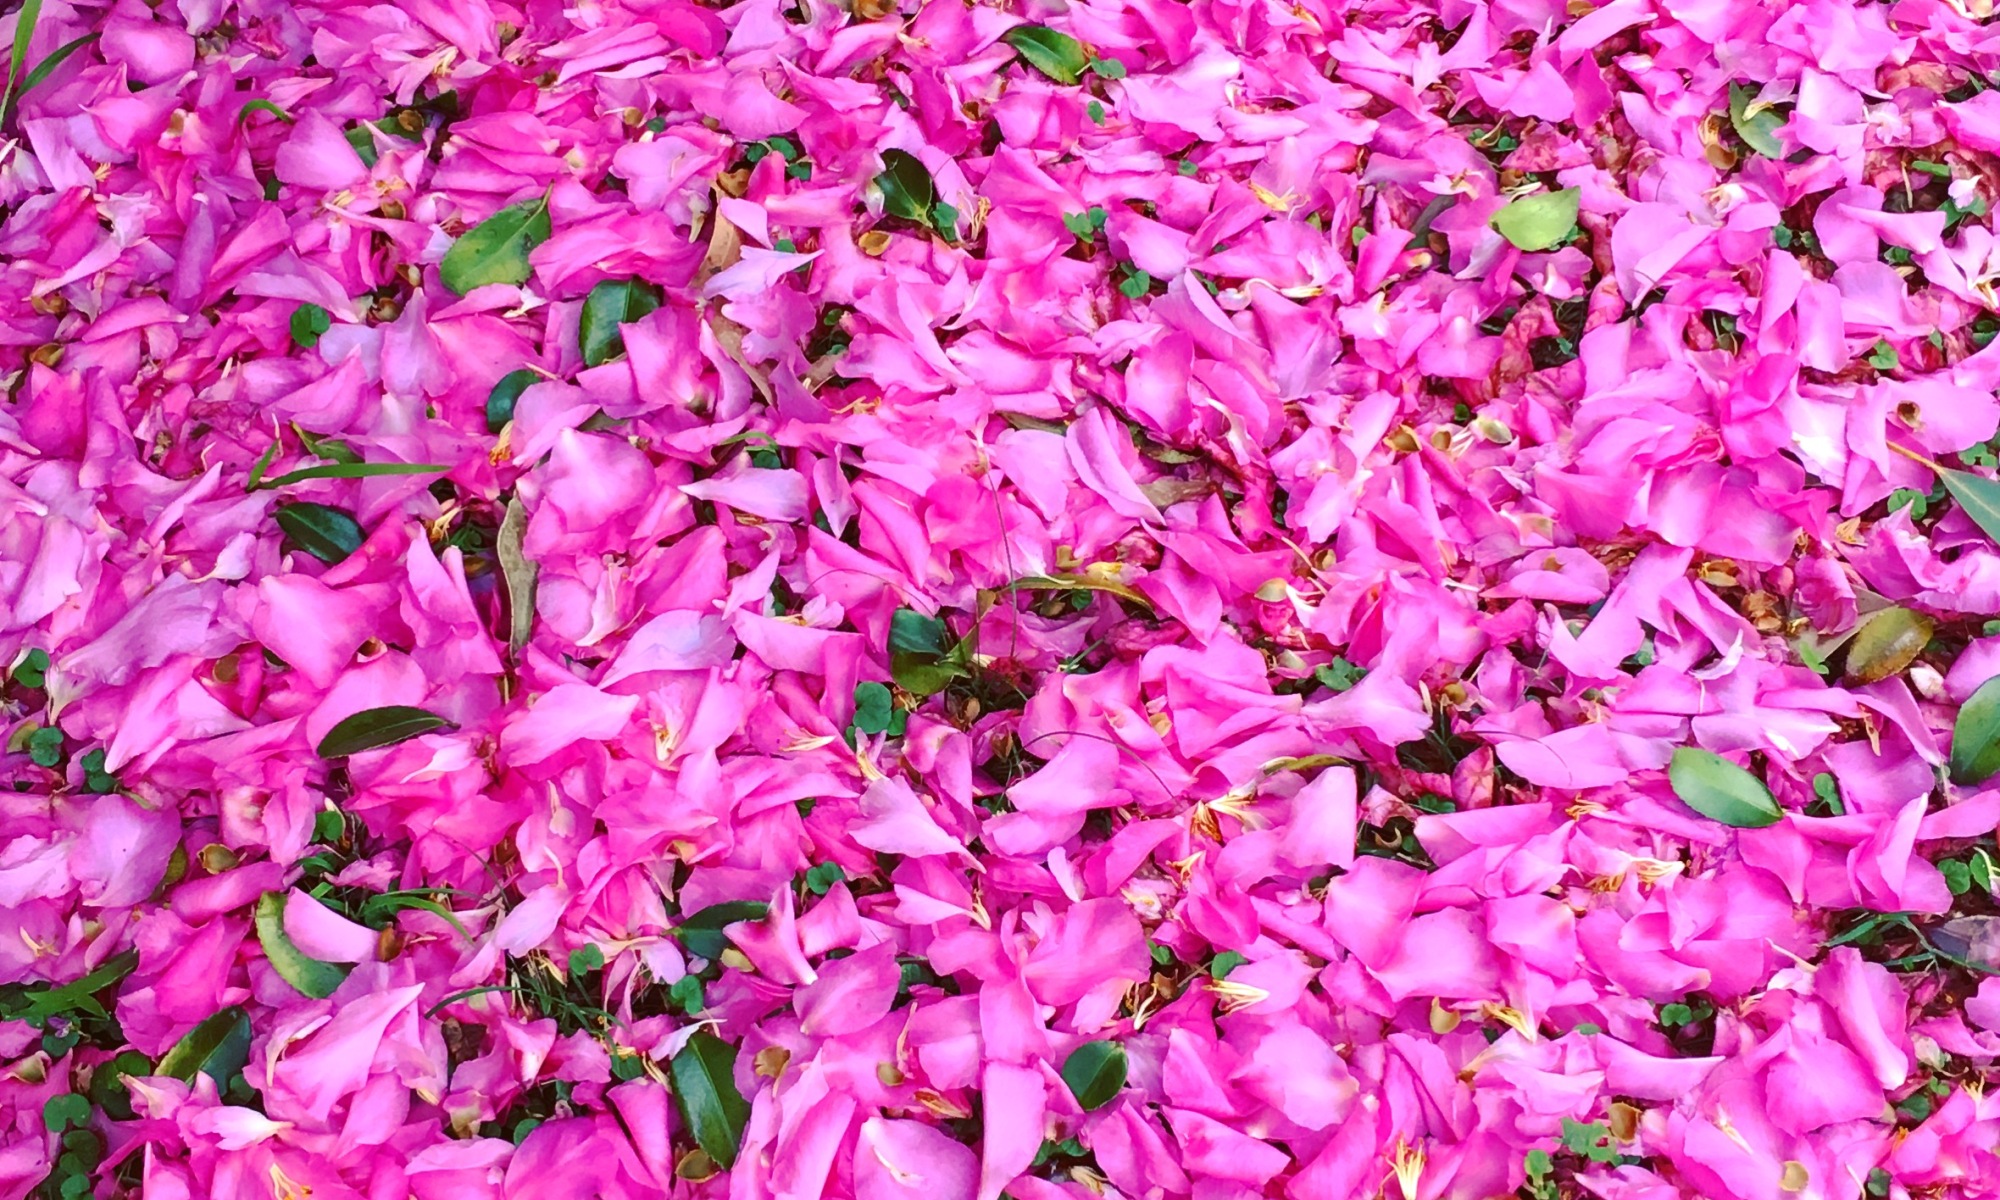 A carpet of pink Camelia flowers